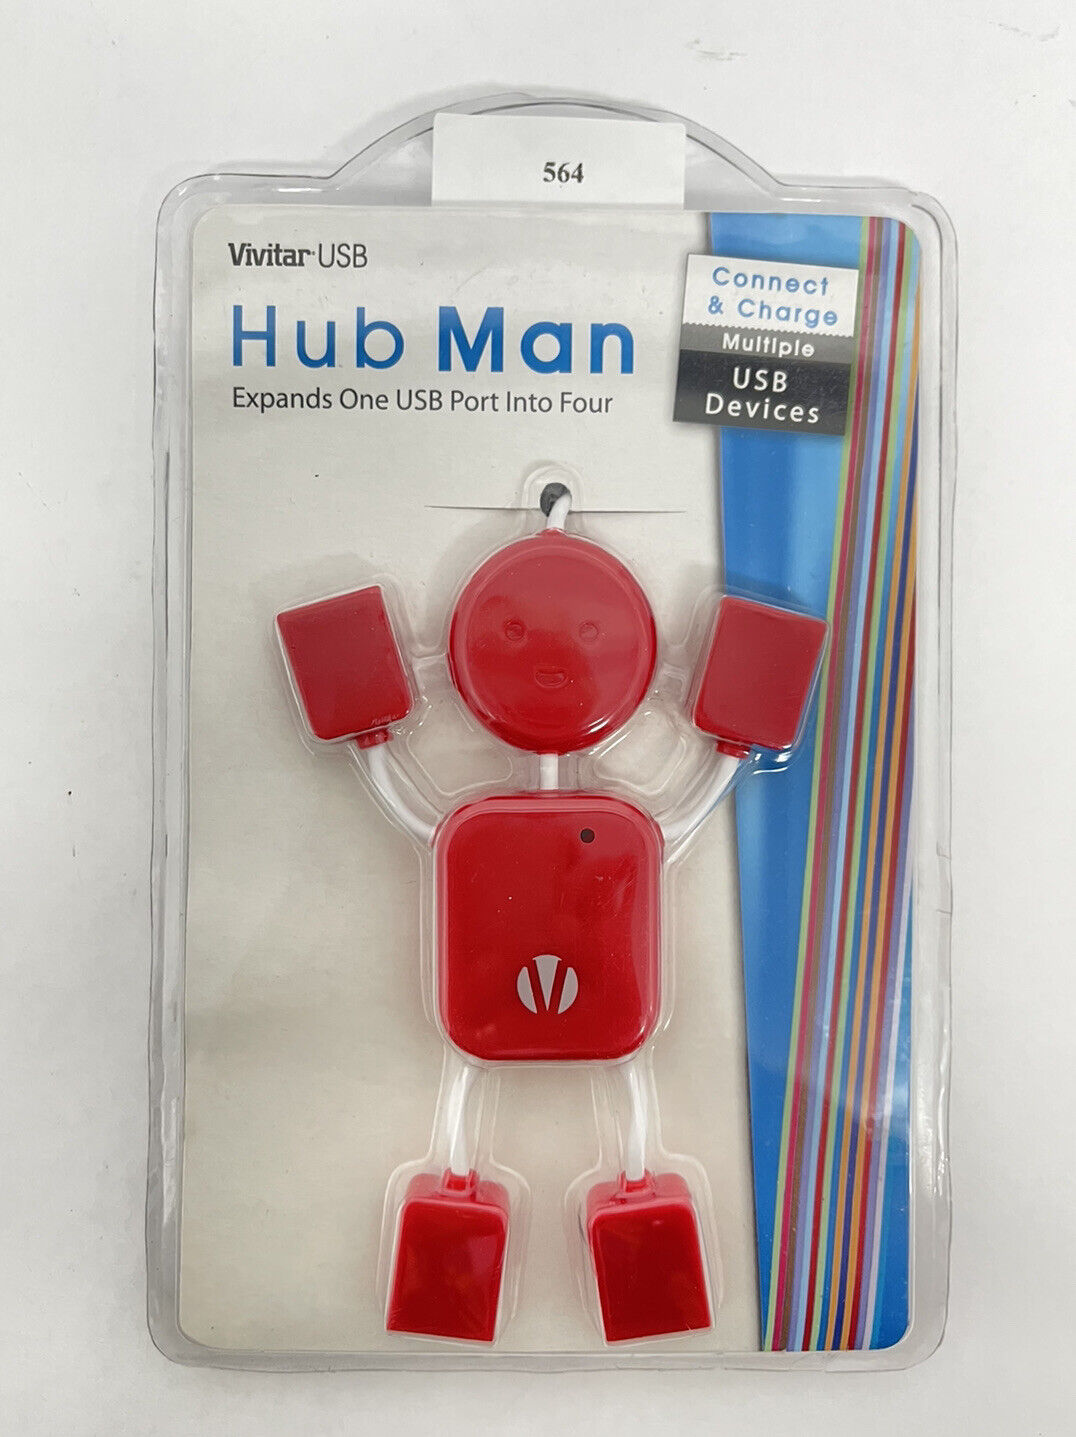 Vivitar USB HUB MAN Expands One USB Port Into Four - RED